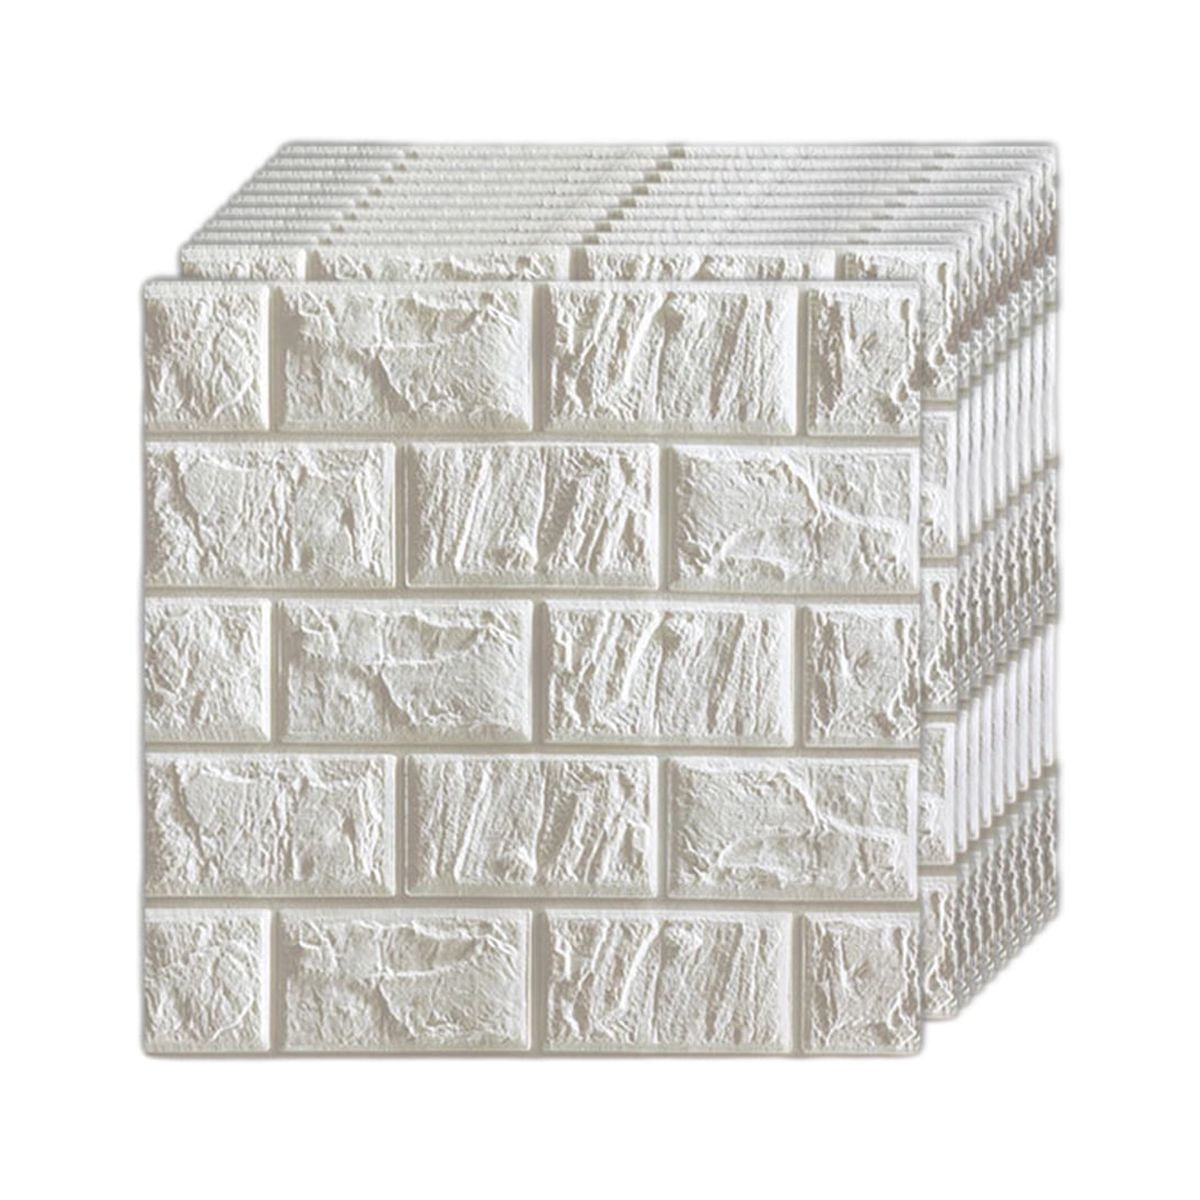 Earth 3D Peel and Stick Foam Brick Wall Panels Stickers 